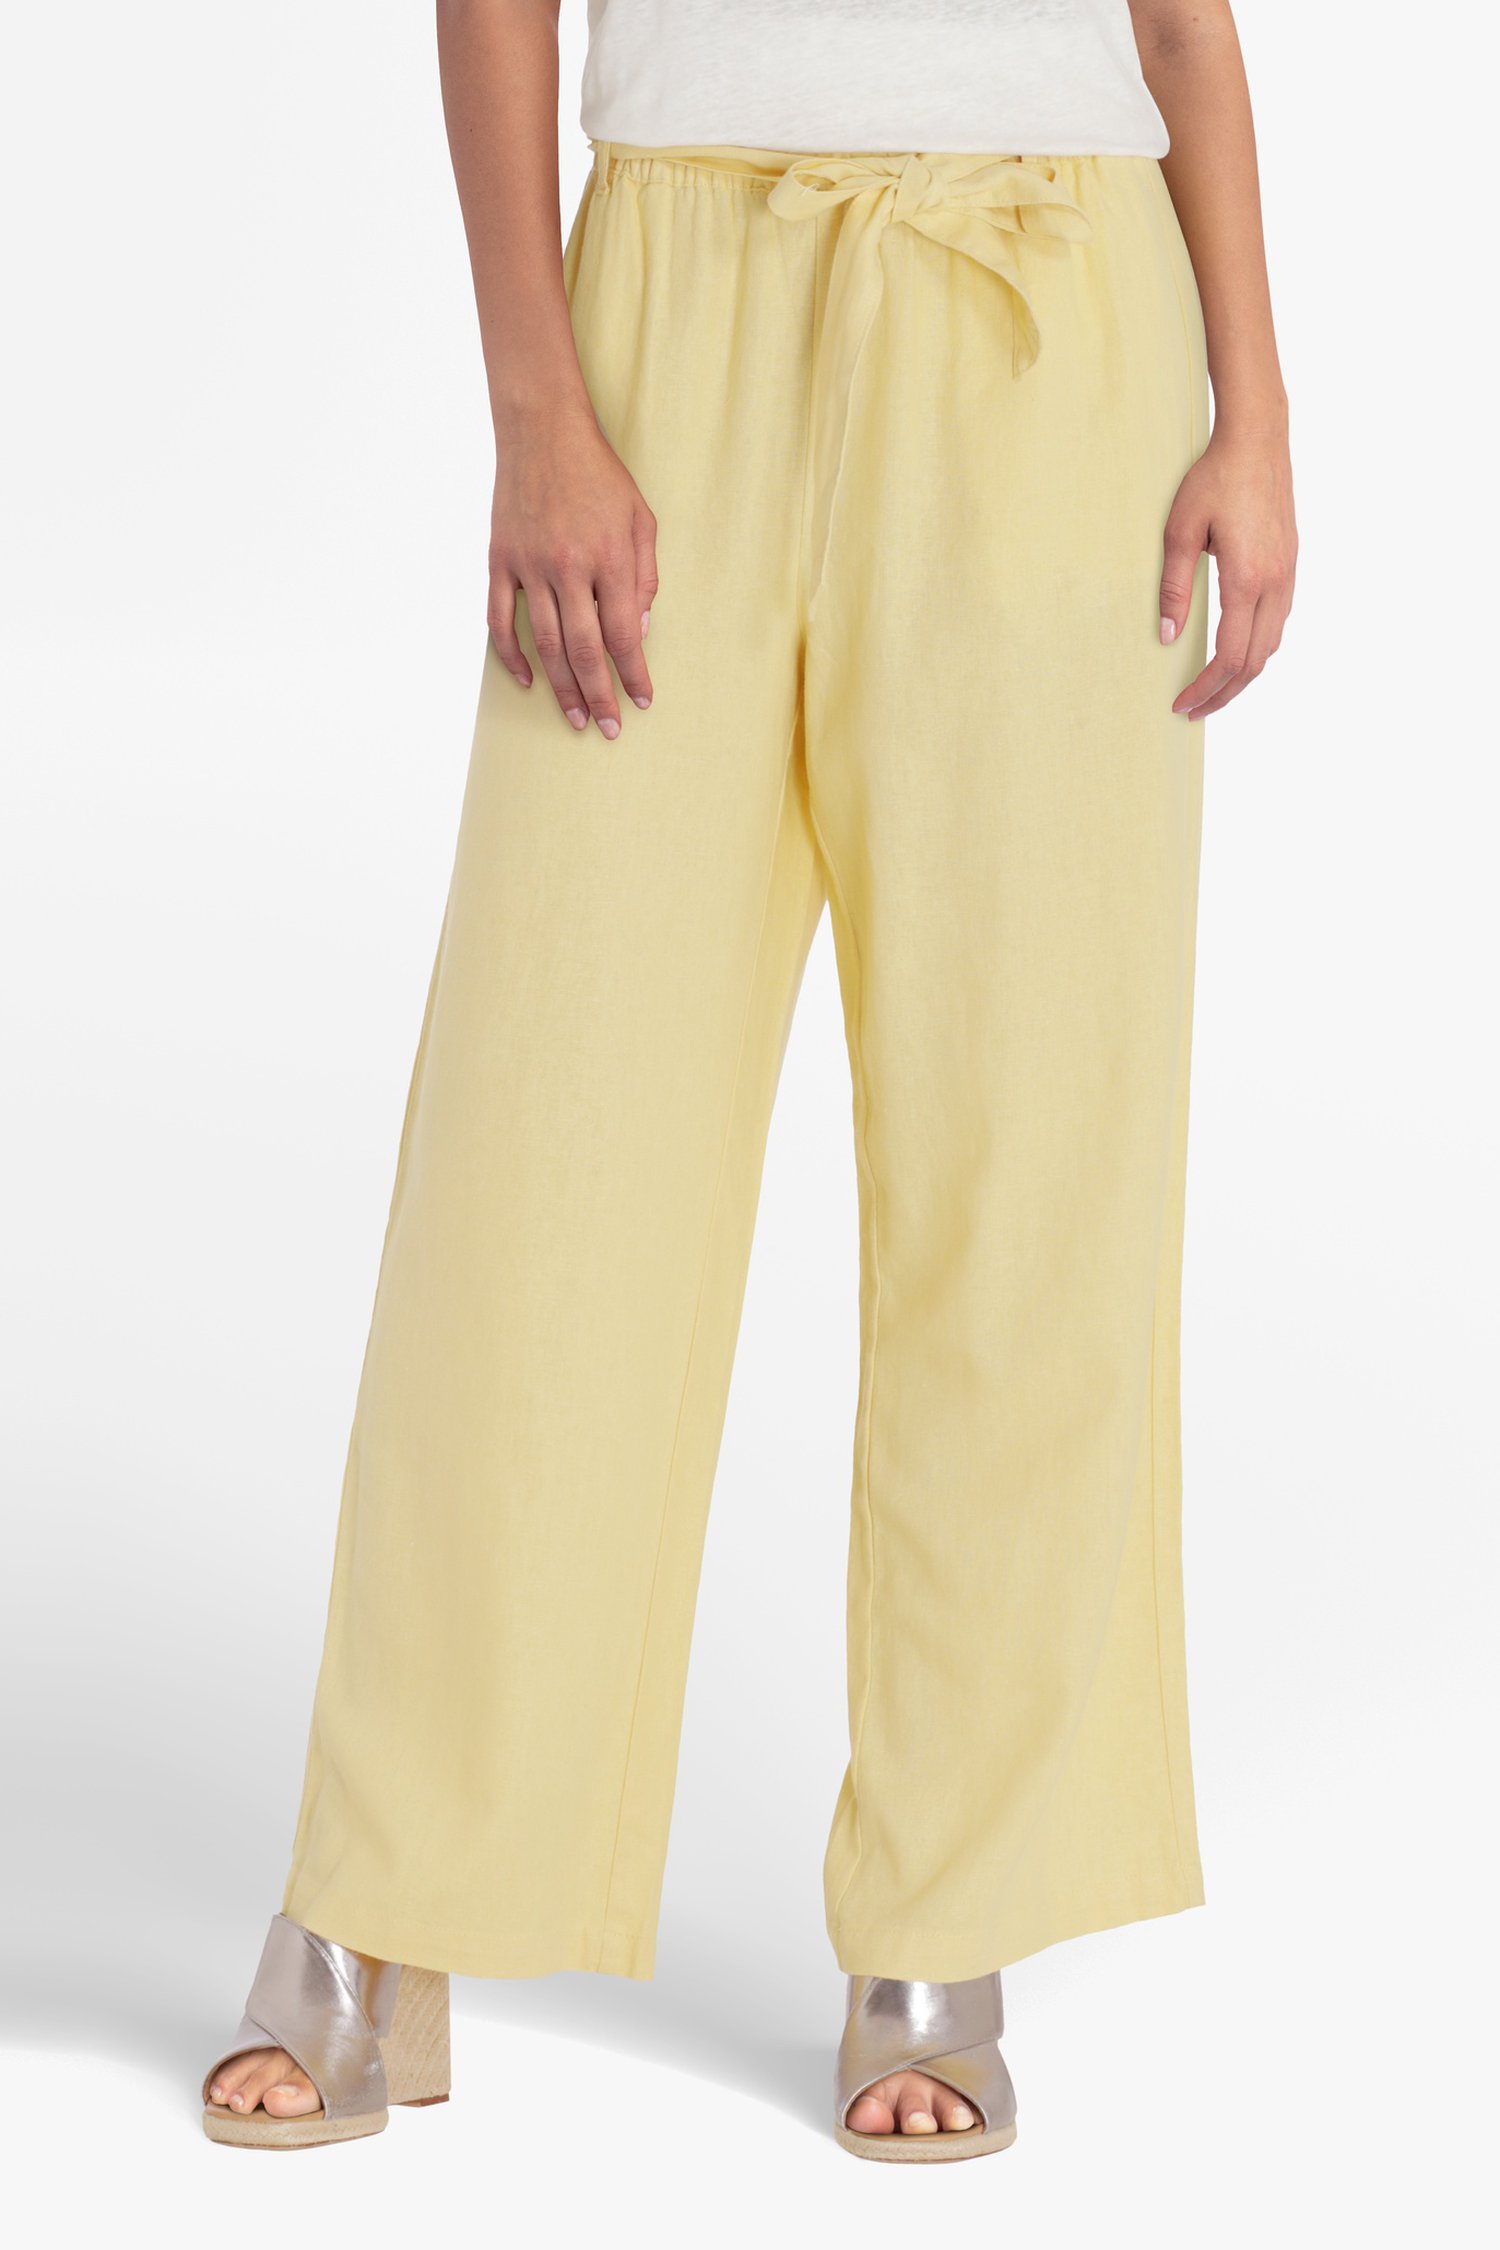 kloon Laag mengen Gele broek met strik - straight fit van JDY | 9760422 | e5